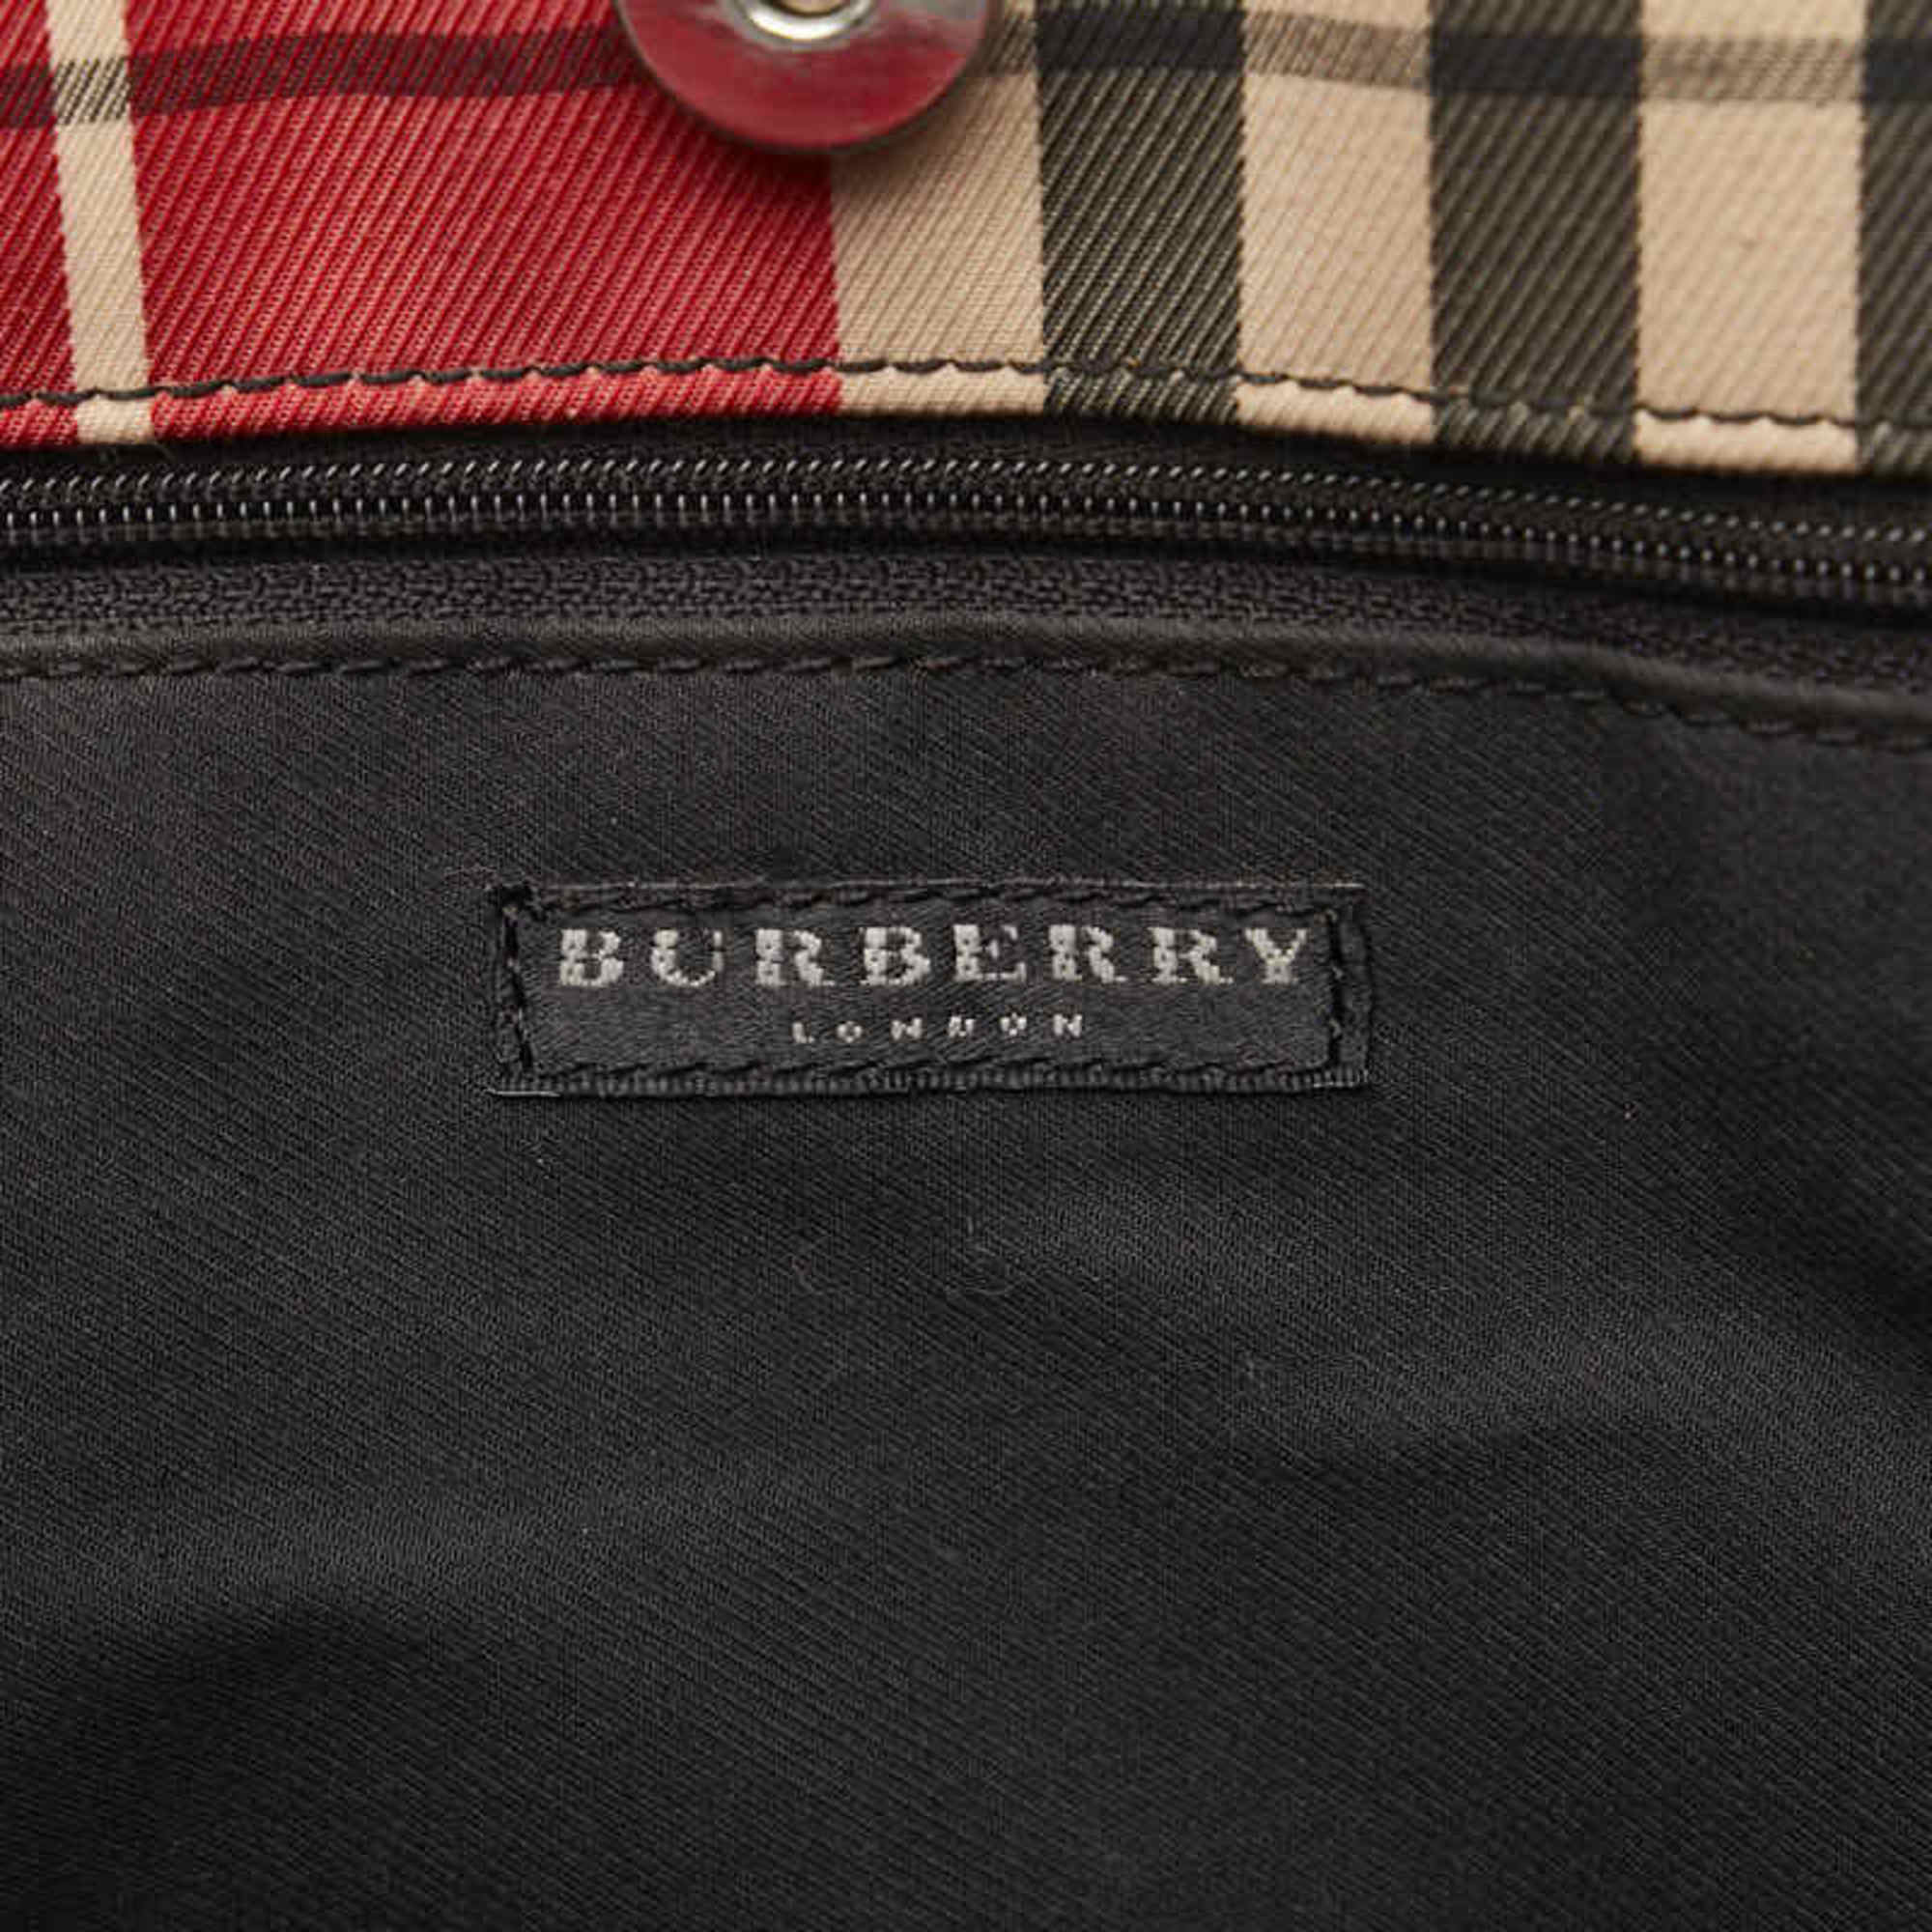 Burberry Check Handbag Red Nylon Leather Women's BURBERRY